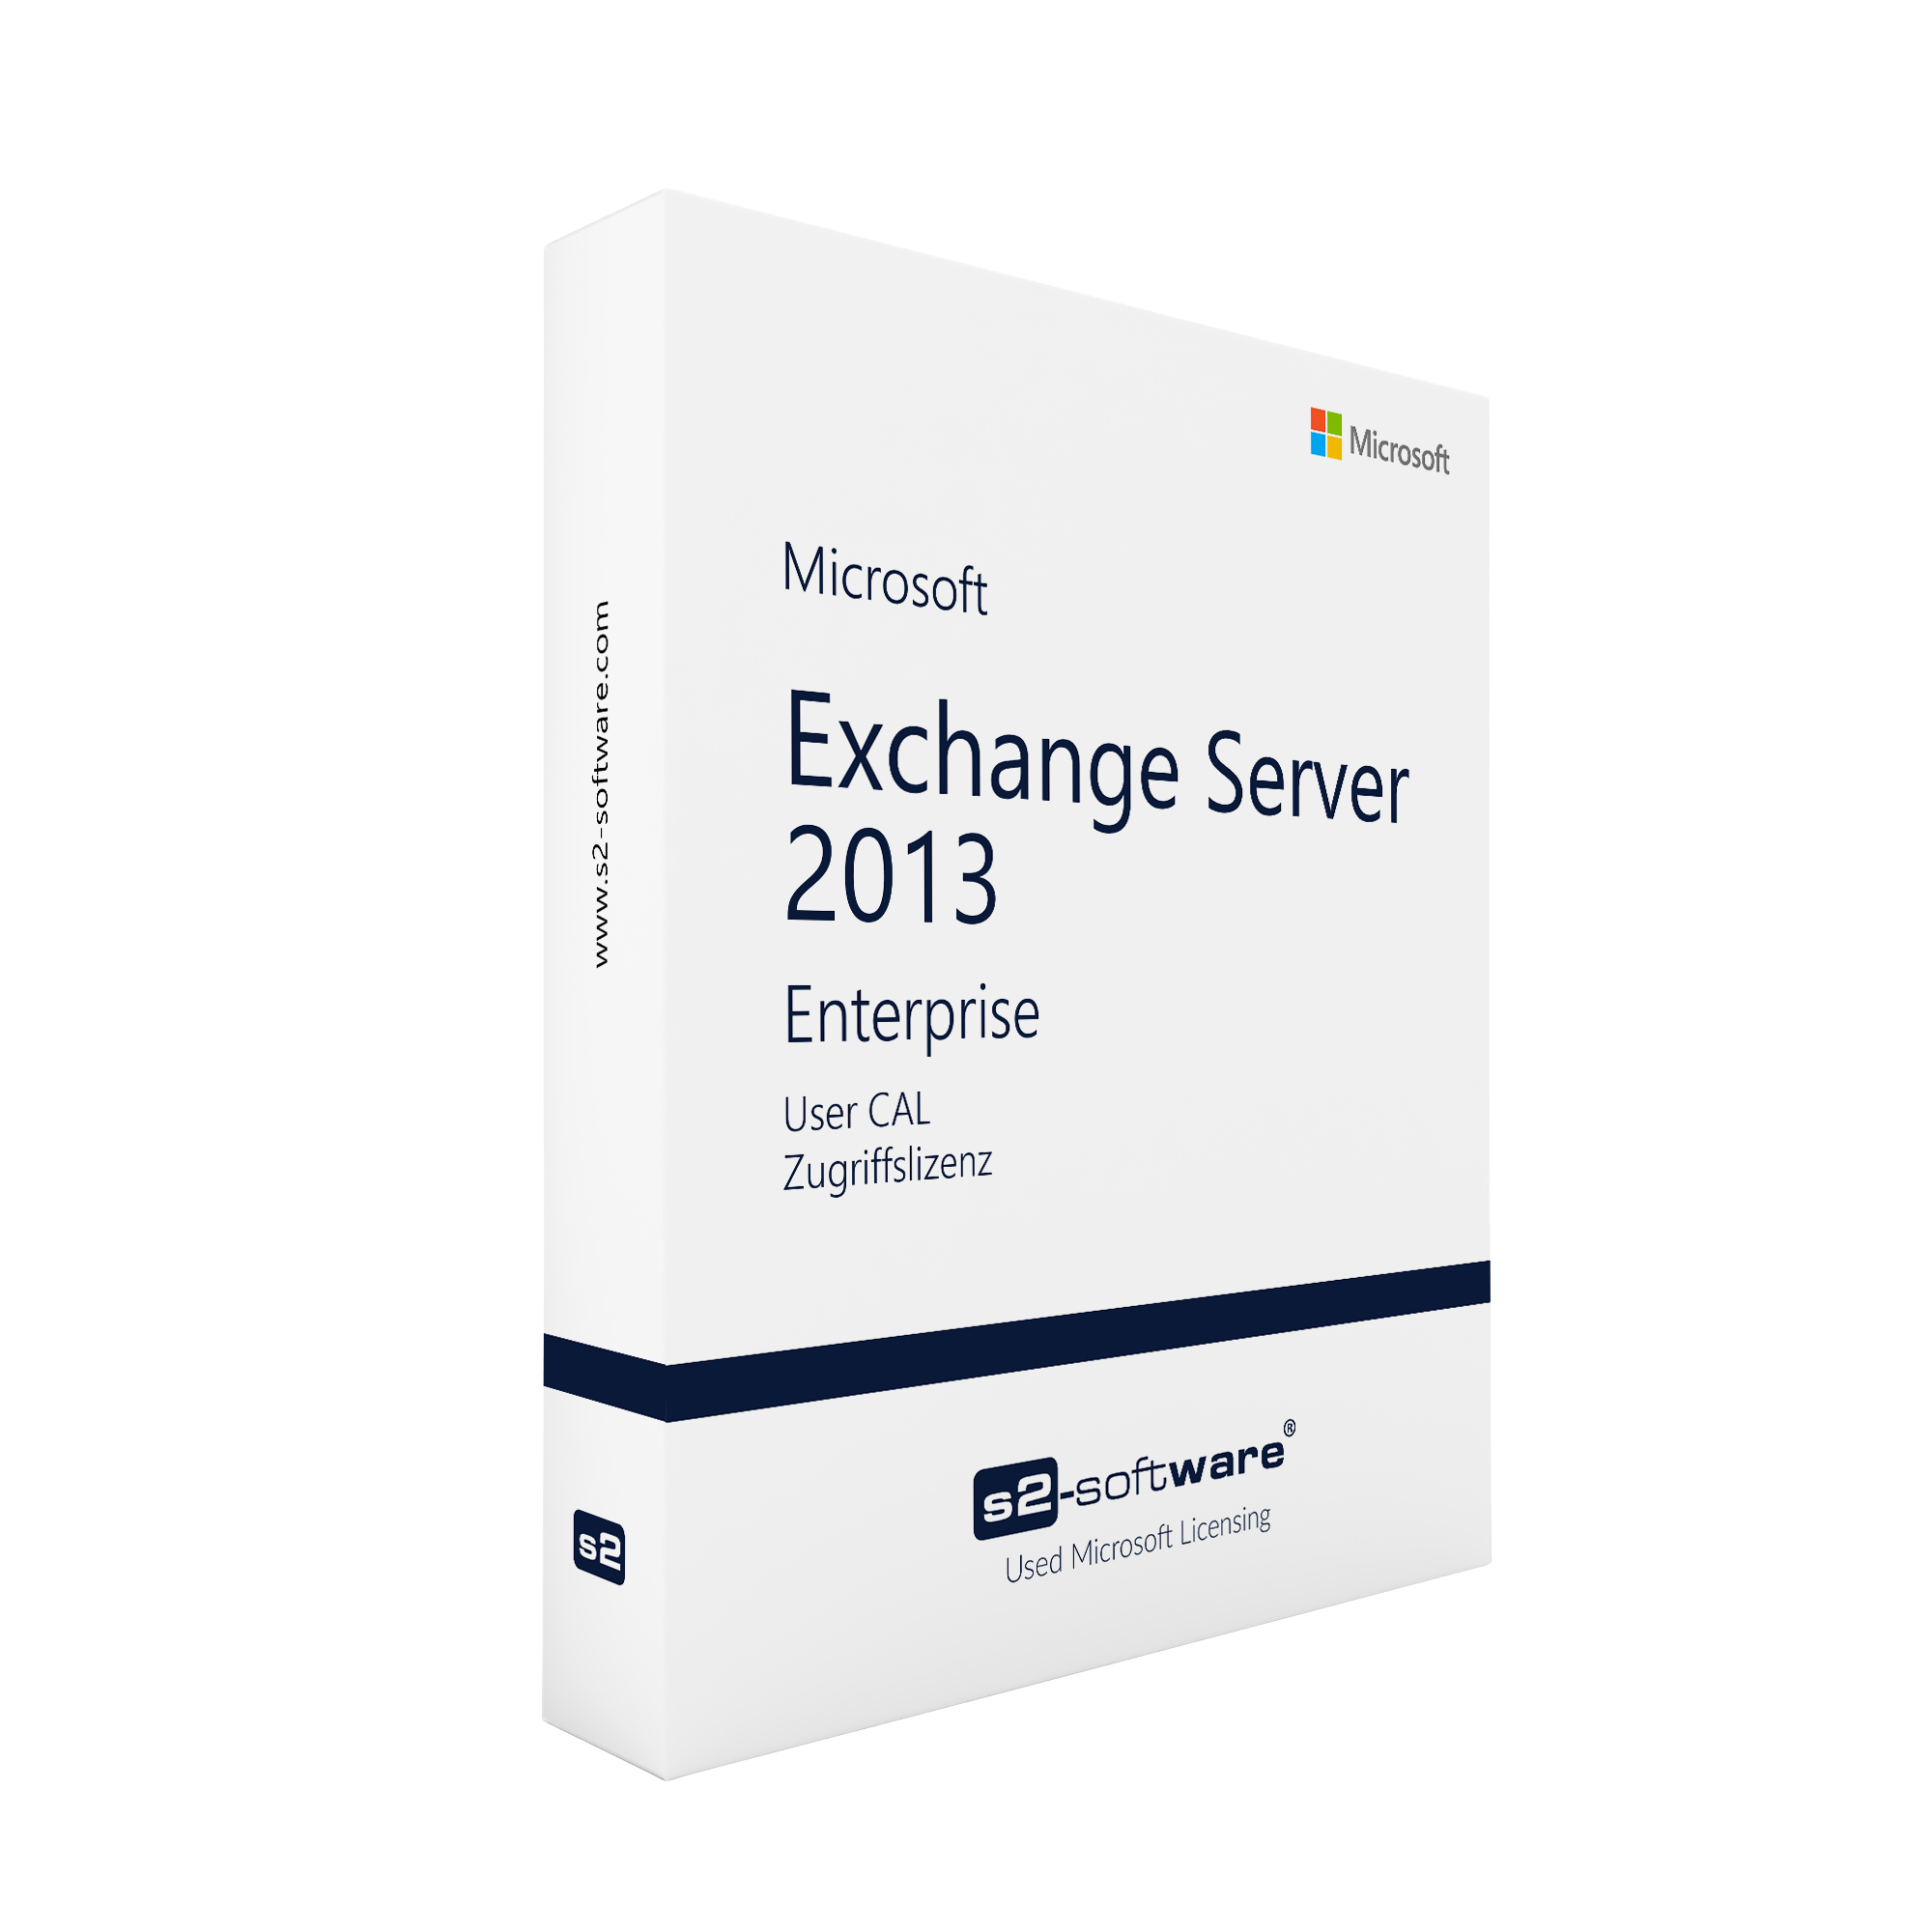 Exchange Server 2013 Enterprise User CAL